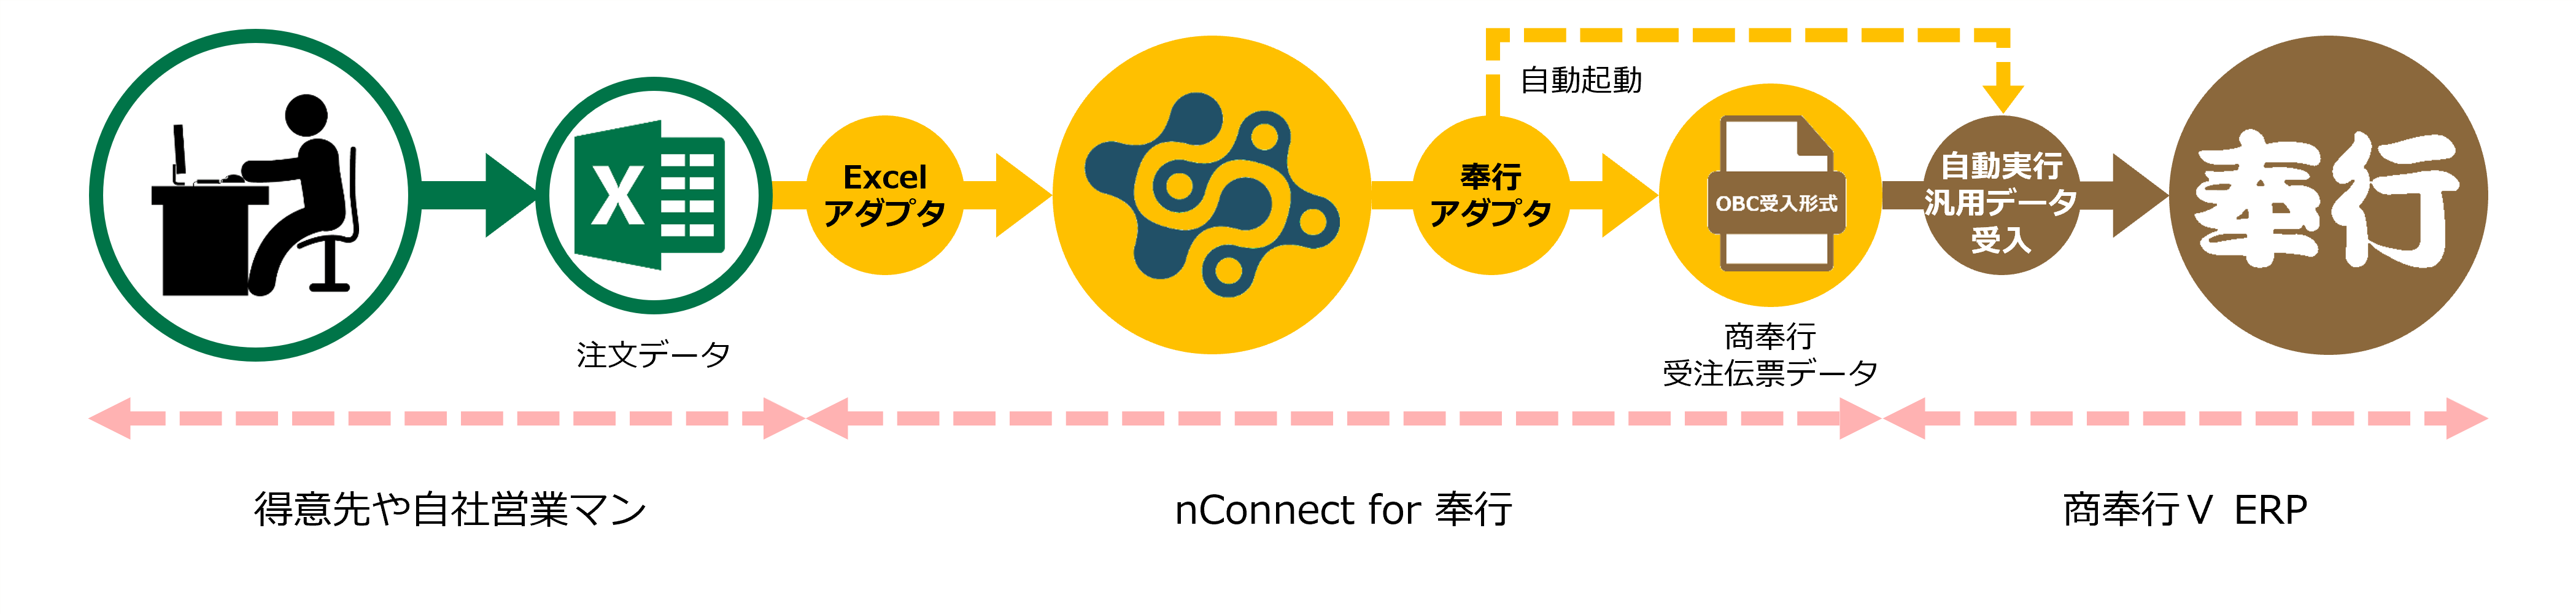 nConnect for 奉行のアダプタとは何ですか?